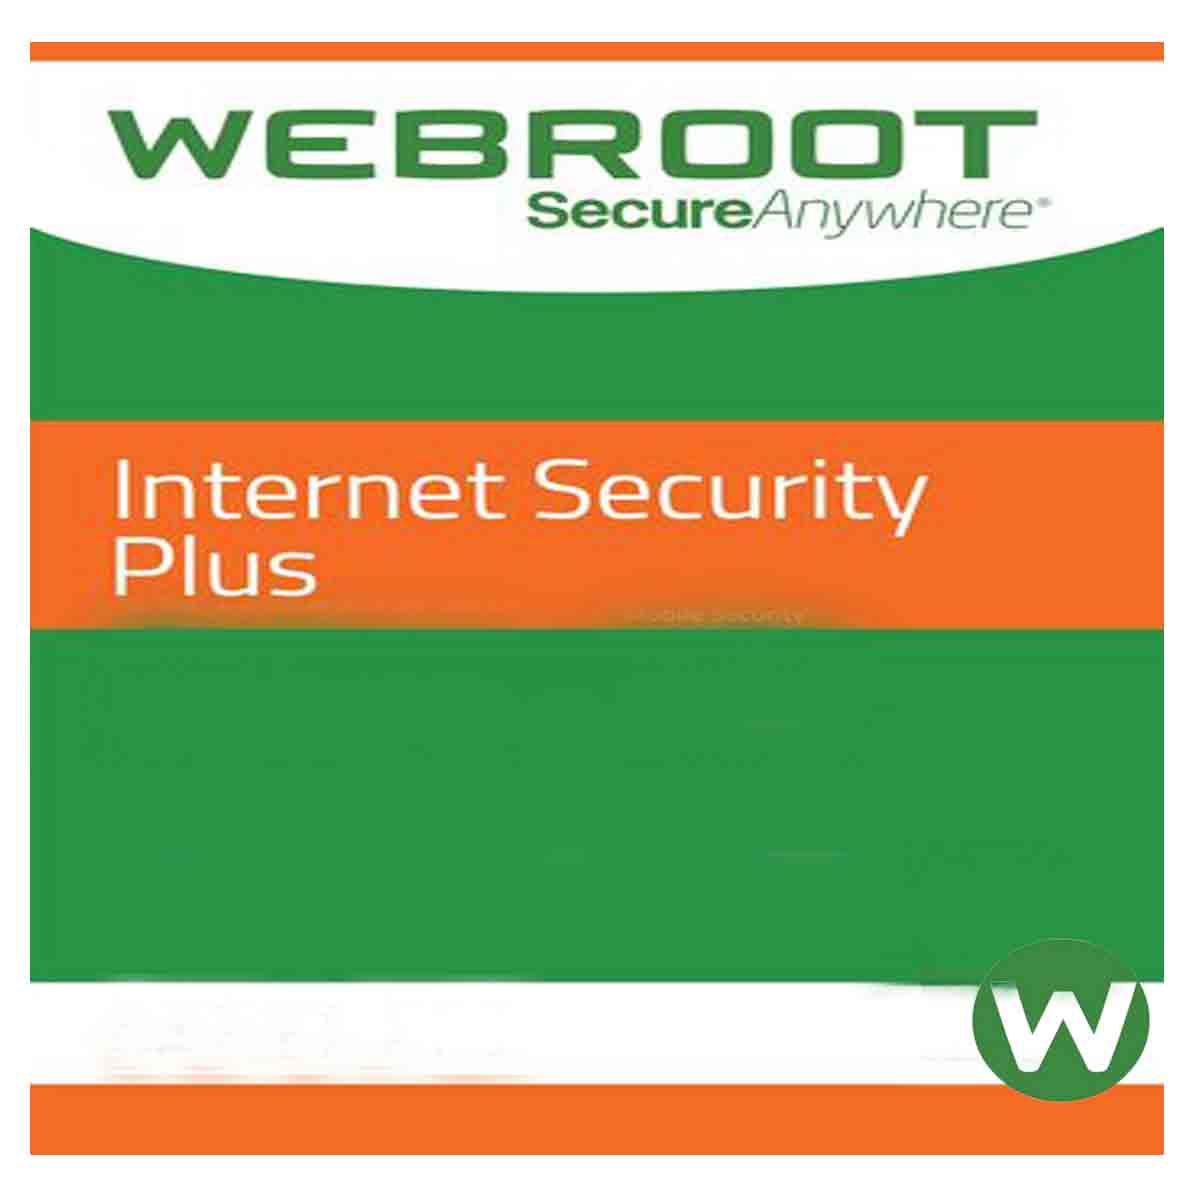 Webroot SecureAnywhere Internet Security Plus License Key-0800-090-3222